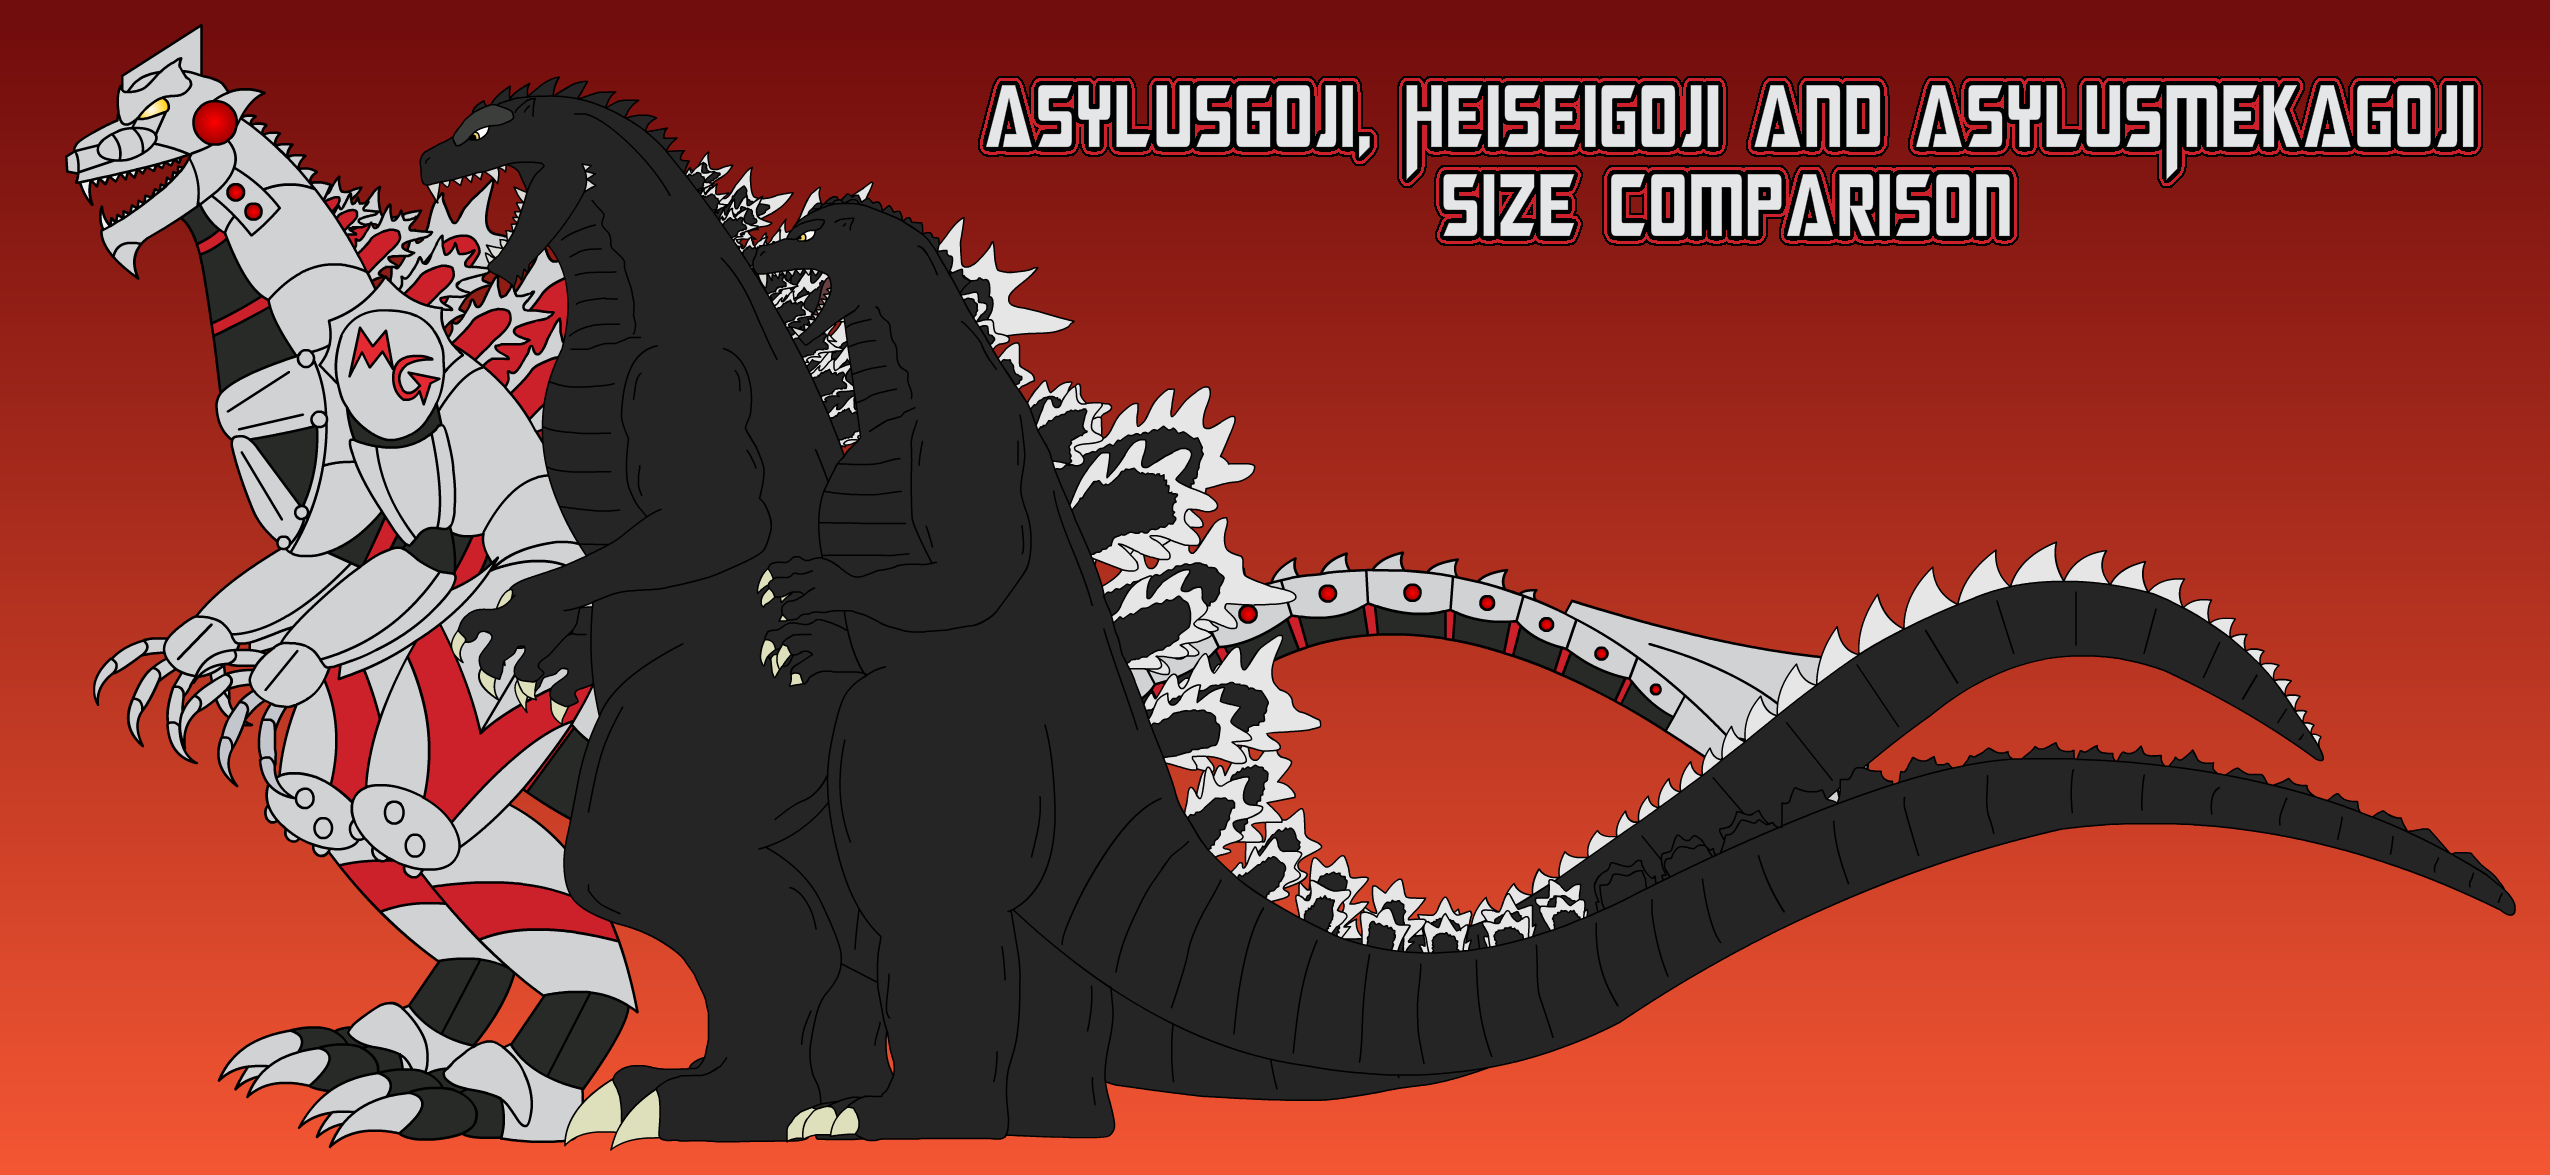 Giant BB vs Giga Baby size comparison by MegaByteRed on DeviantArt